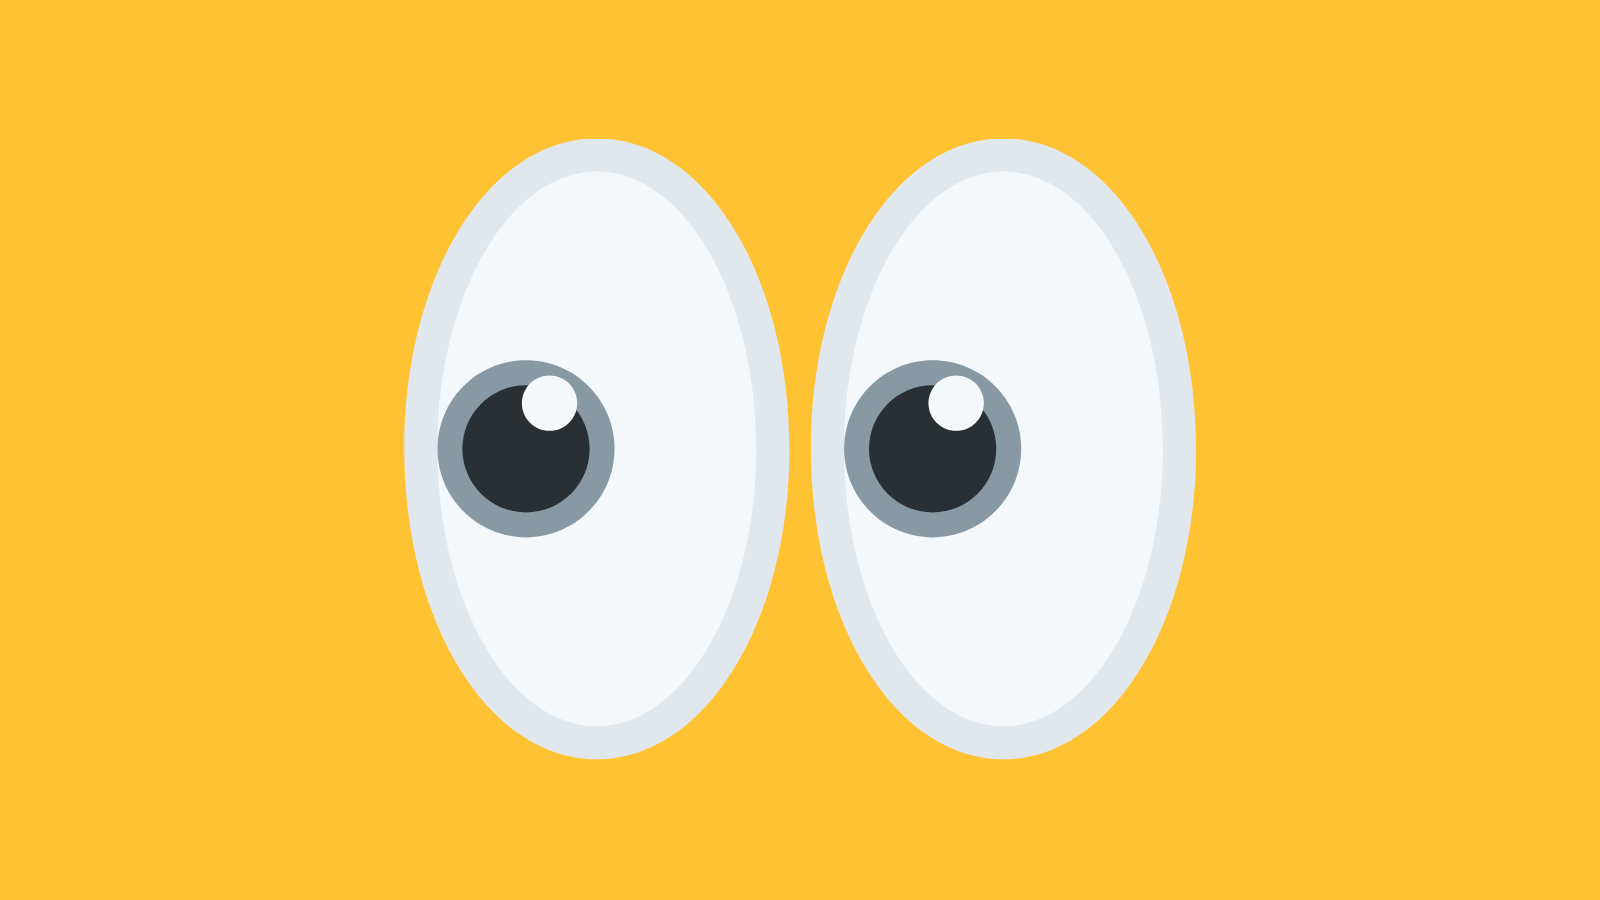 The eyeballs emoji